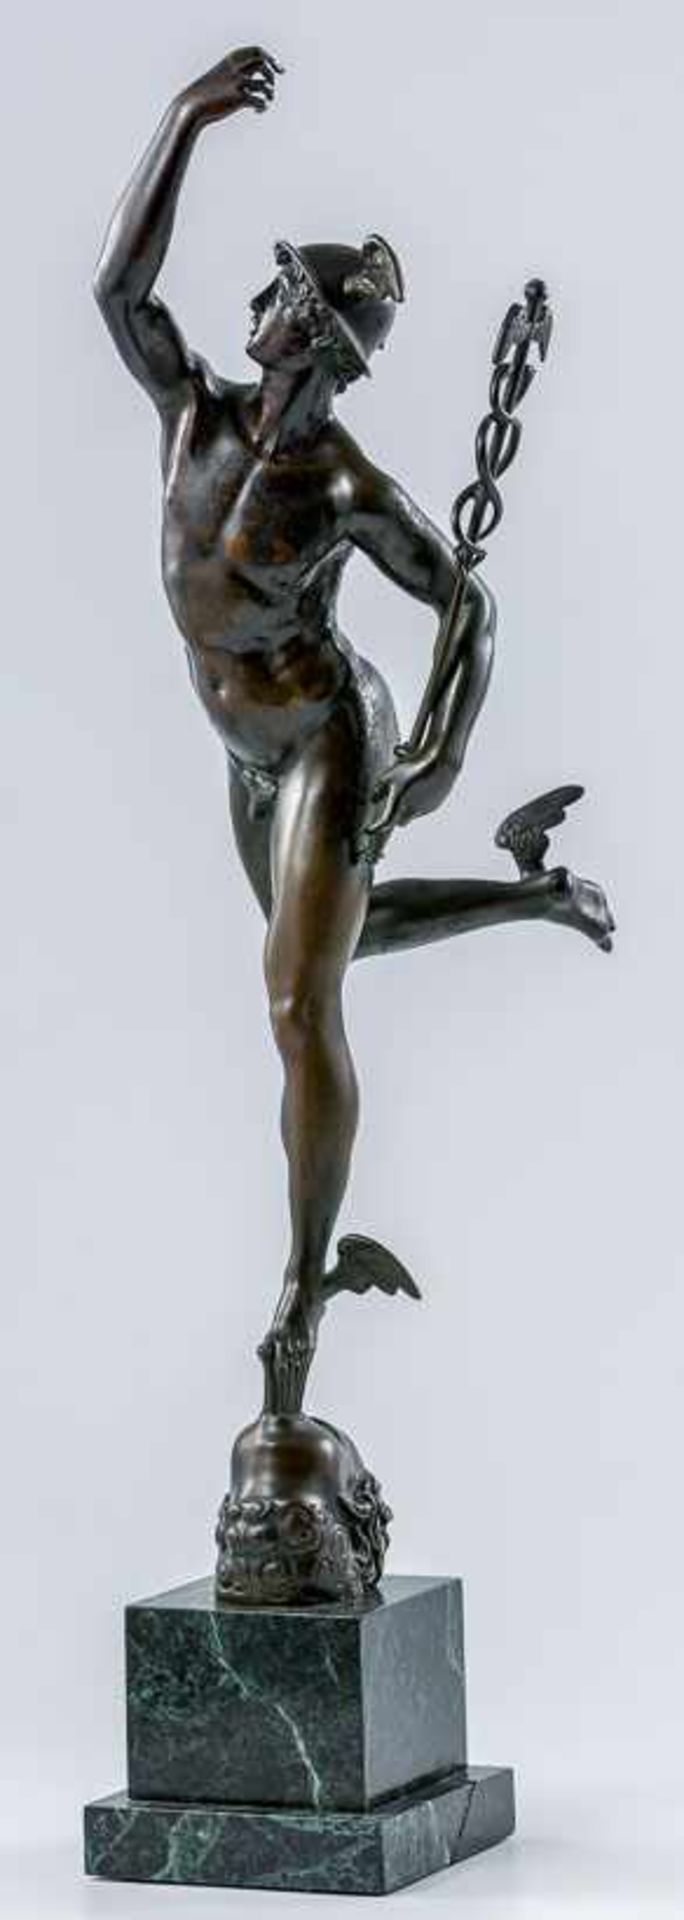 Merkur nach Giovanni da Bologna, gen. Giambologna (1529-1608). Bronze, braun patiniert. Nach der